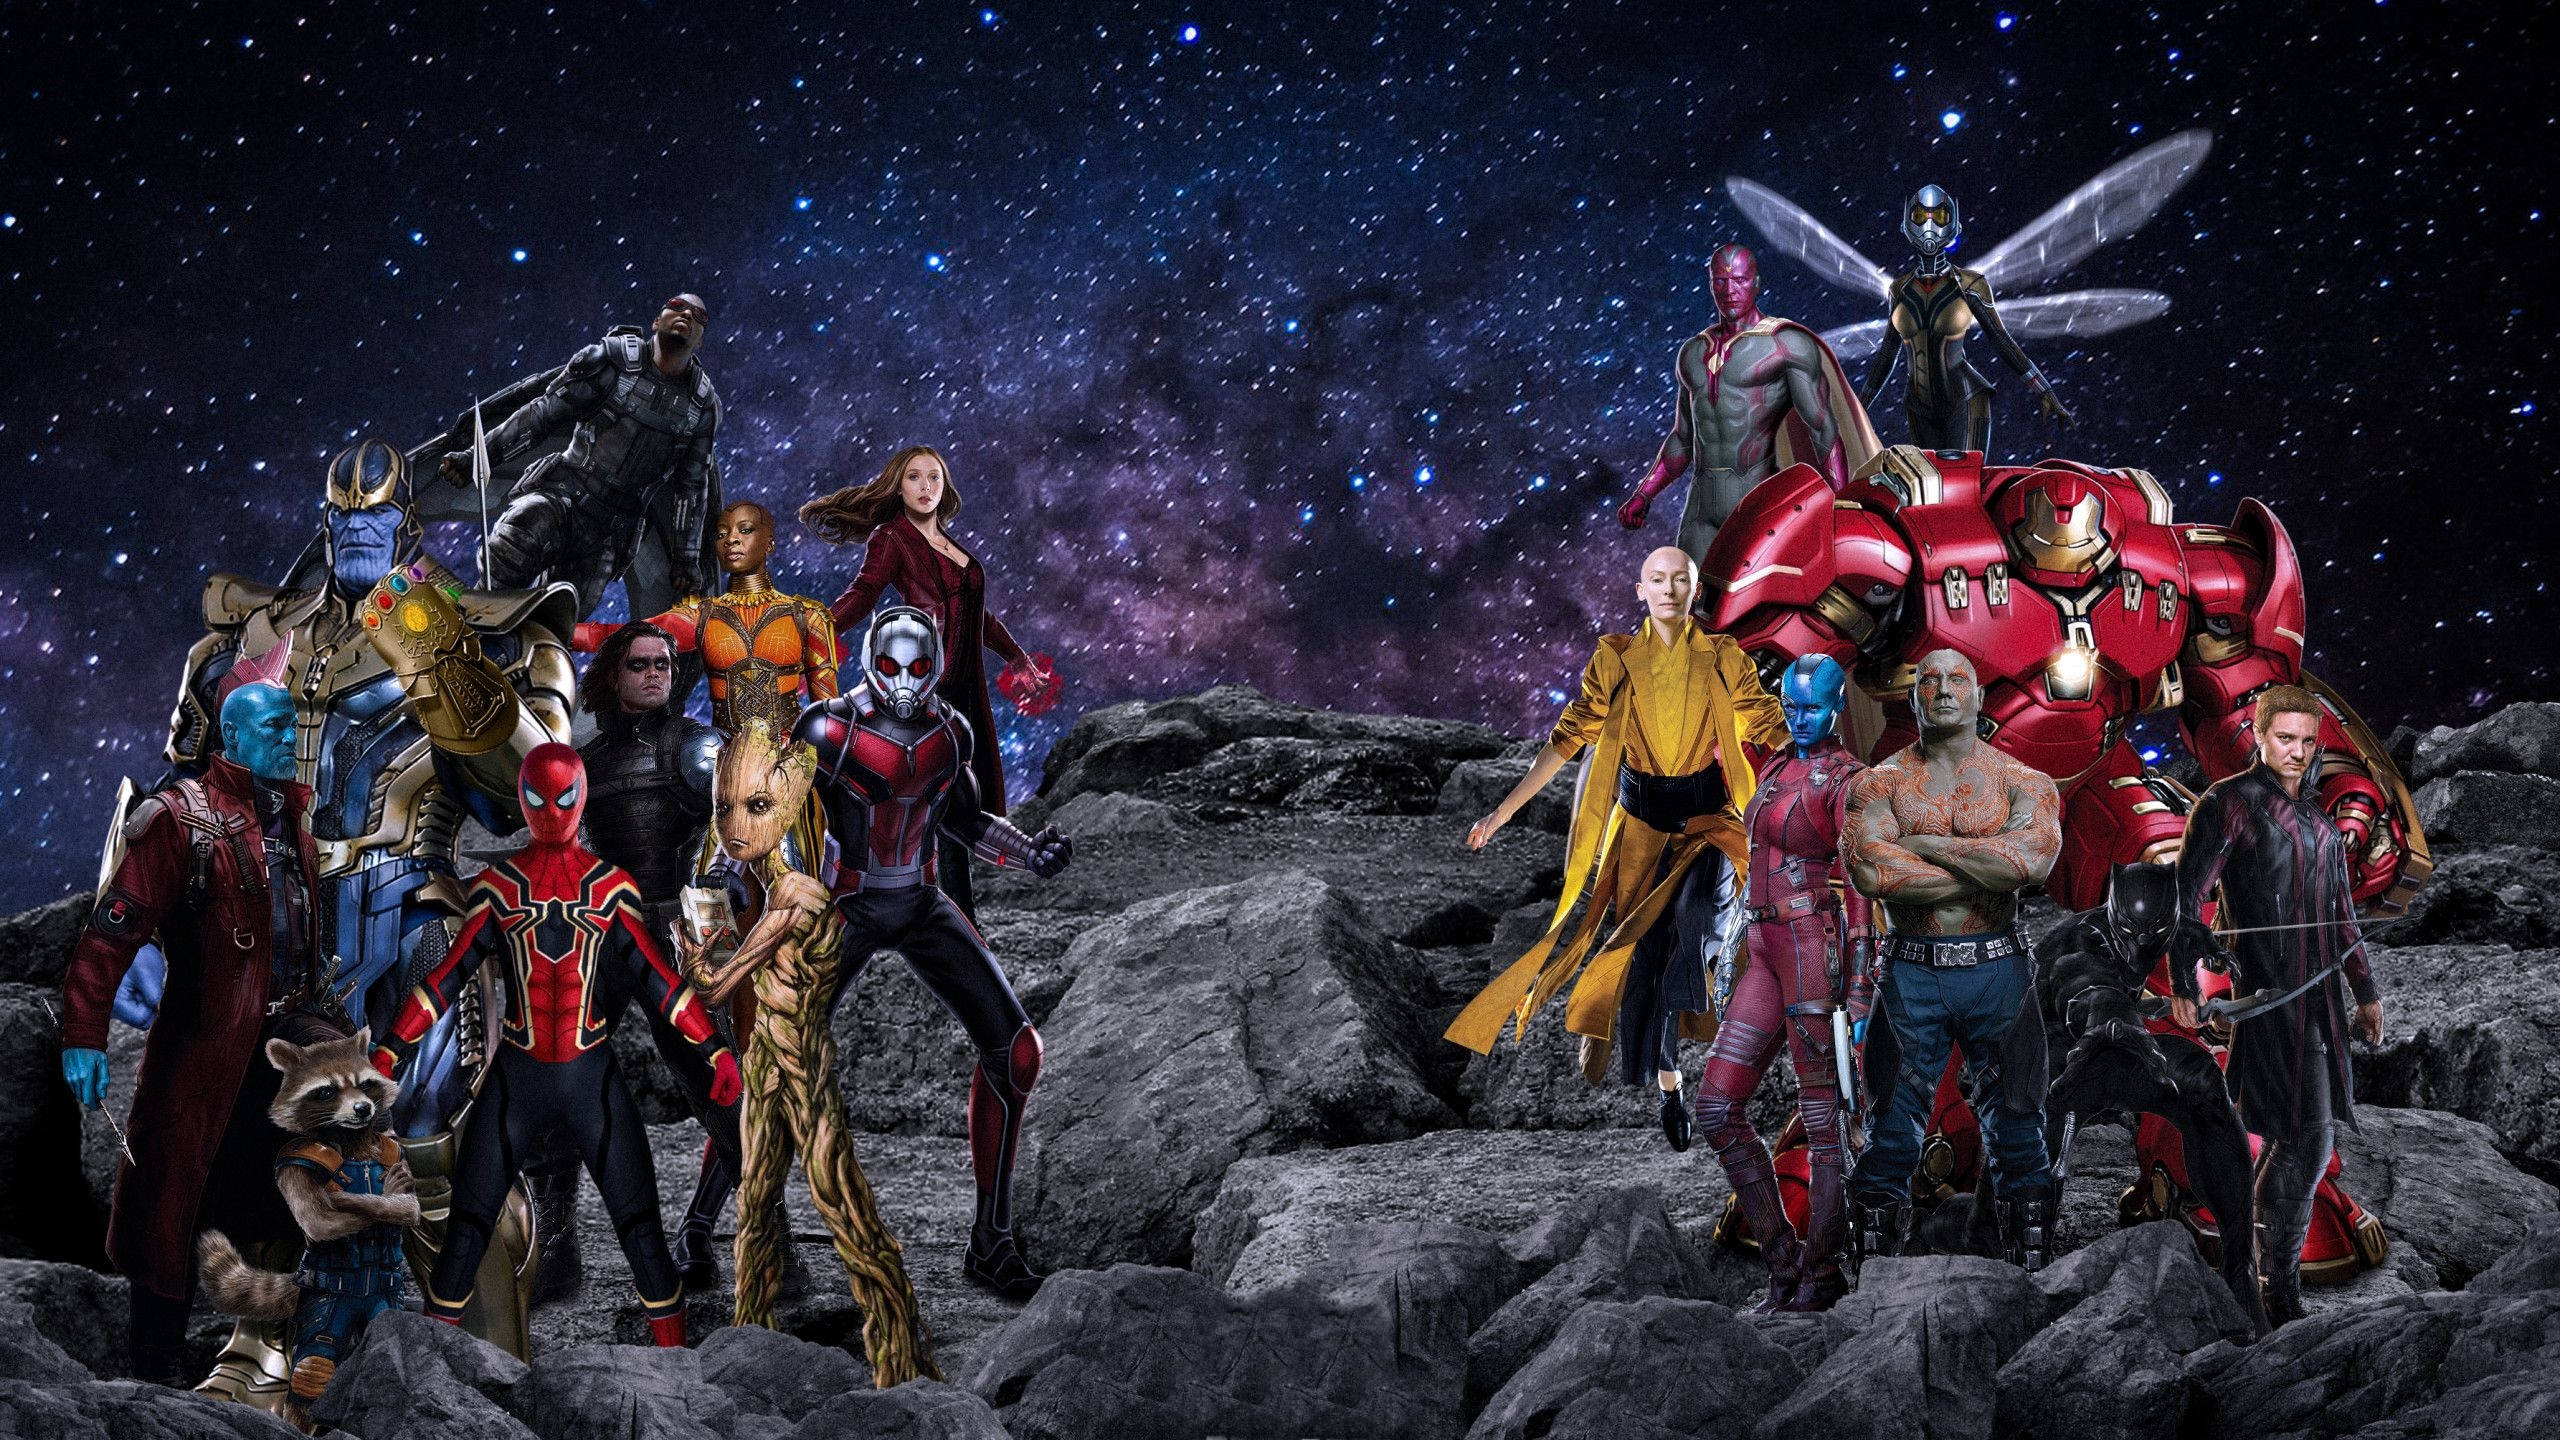 2560x1440 Marvel Heroes On Asteroid Wallpaper